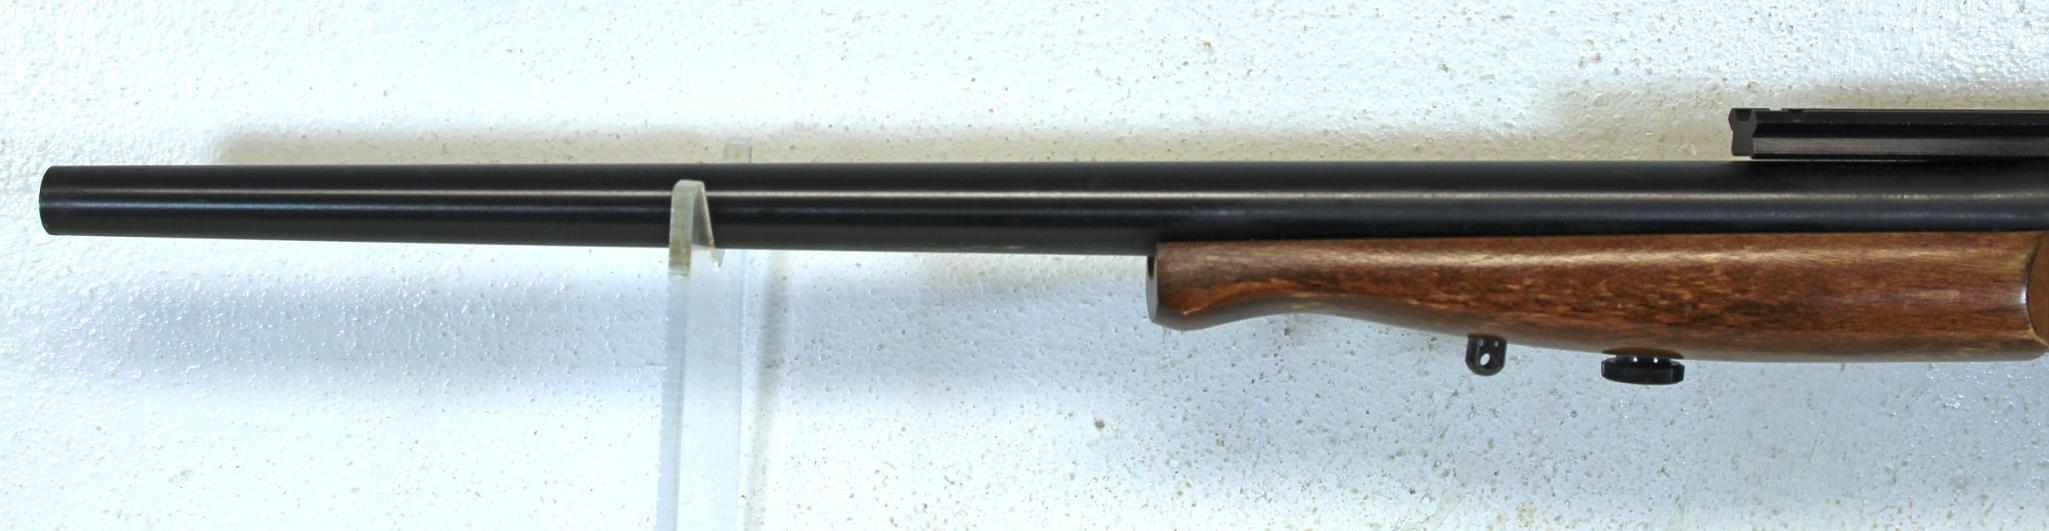 H&R Handi Rifle SB2 .223 Rem. Single Shot Rifle 22" Barrel... SN#NF 296531...